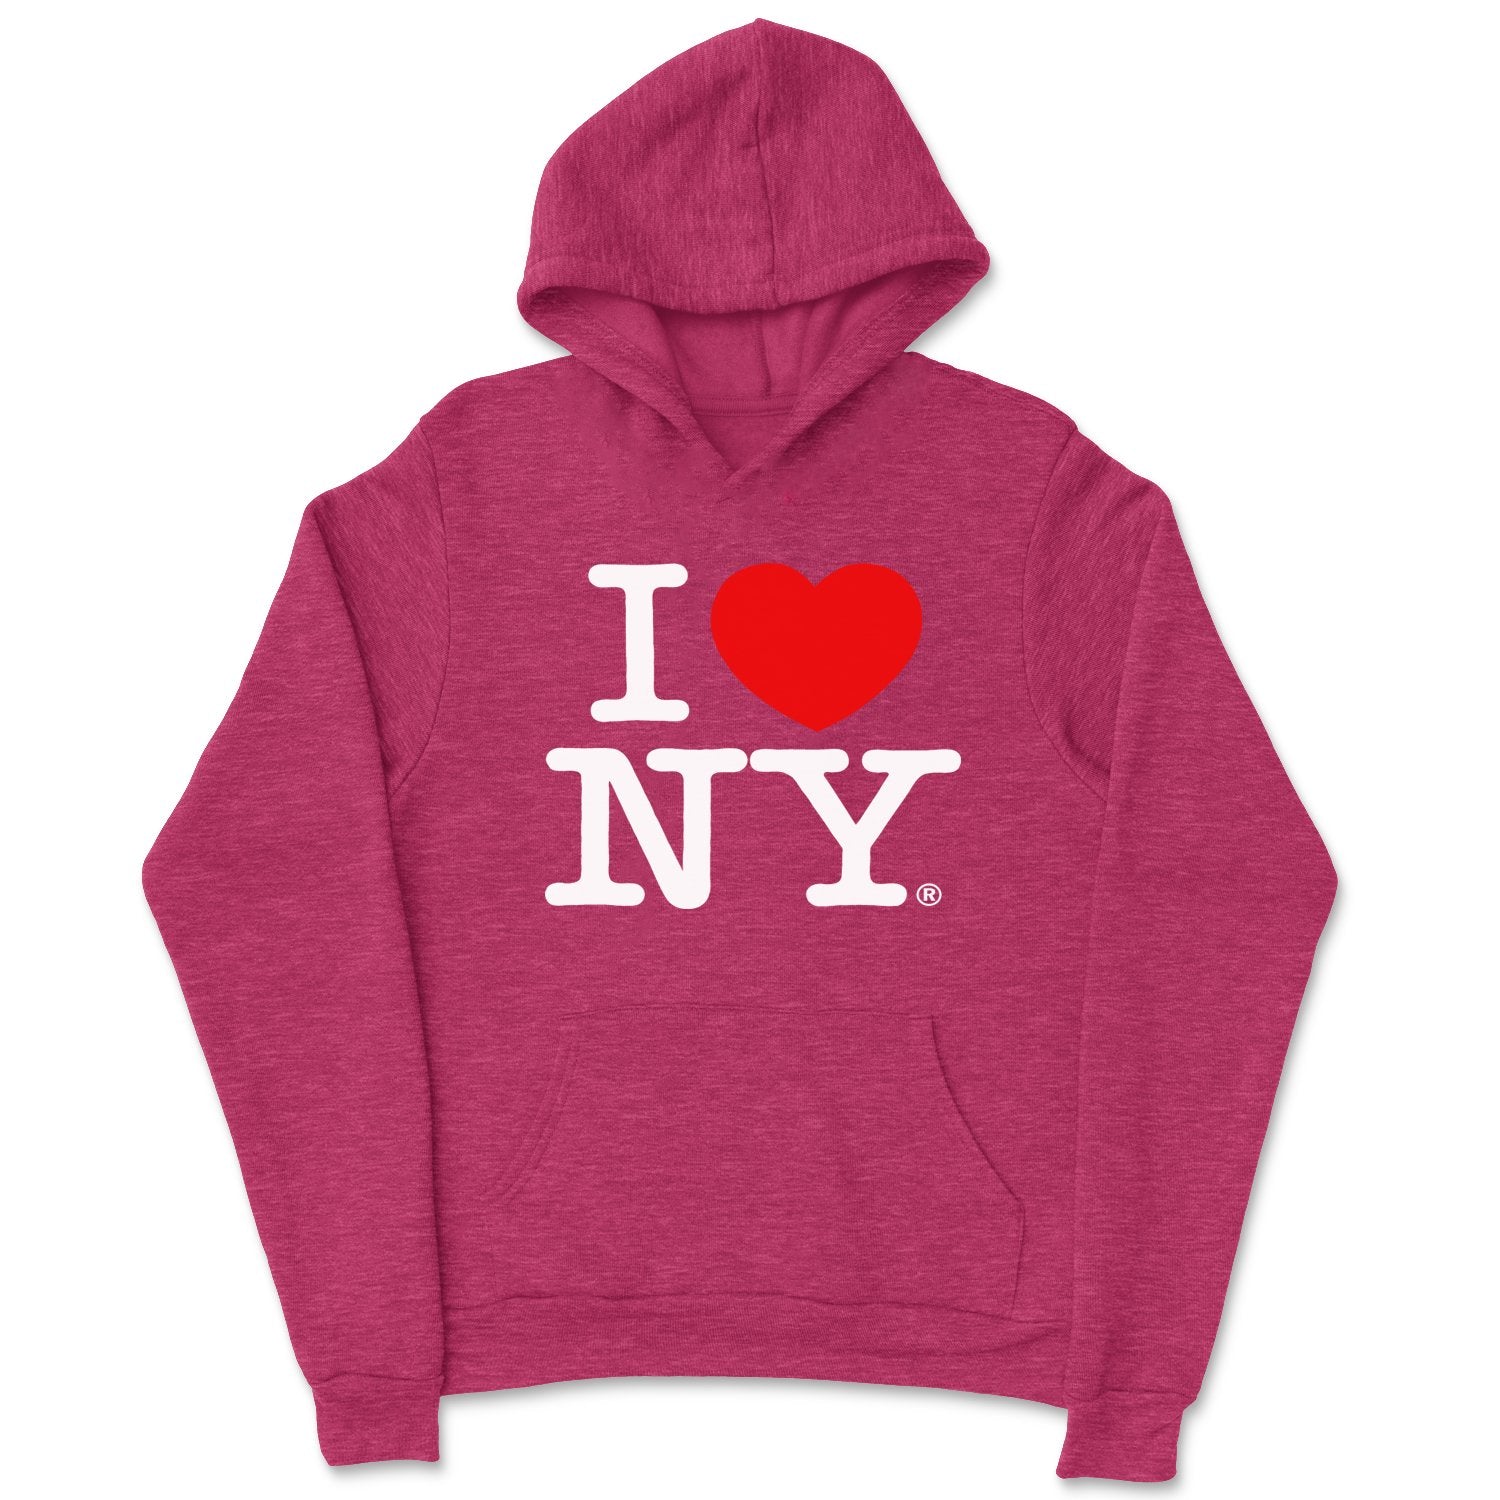 Ich liebe NY Kinder Hoodie Sweatshirt Heather Burgunderrot